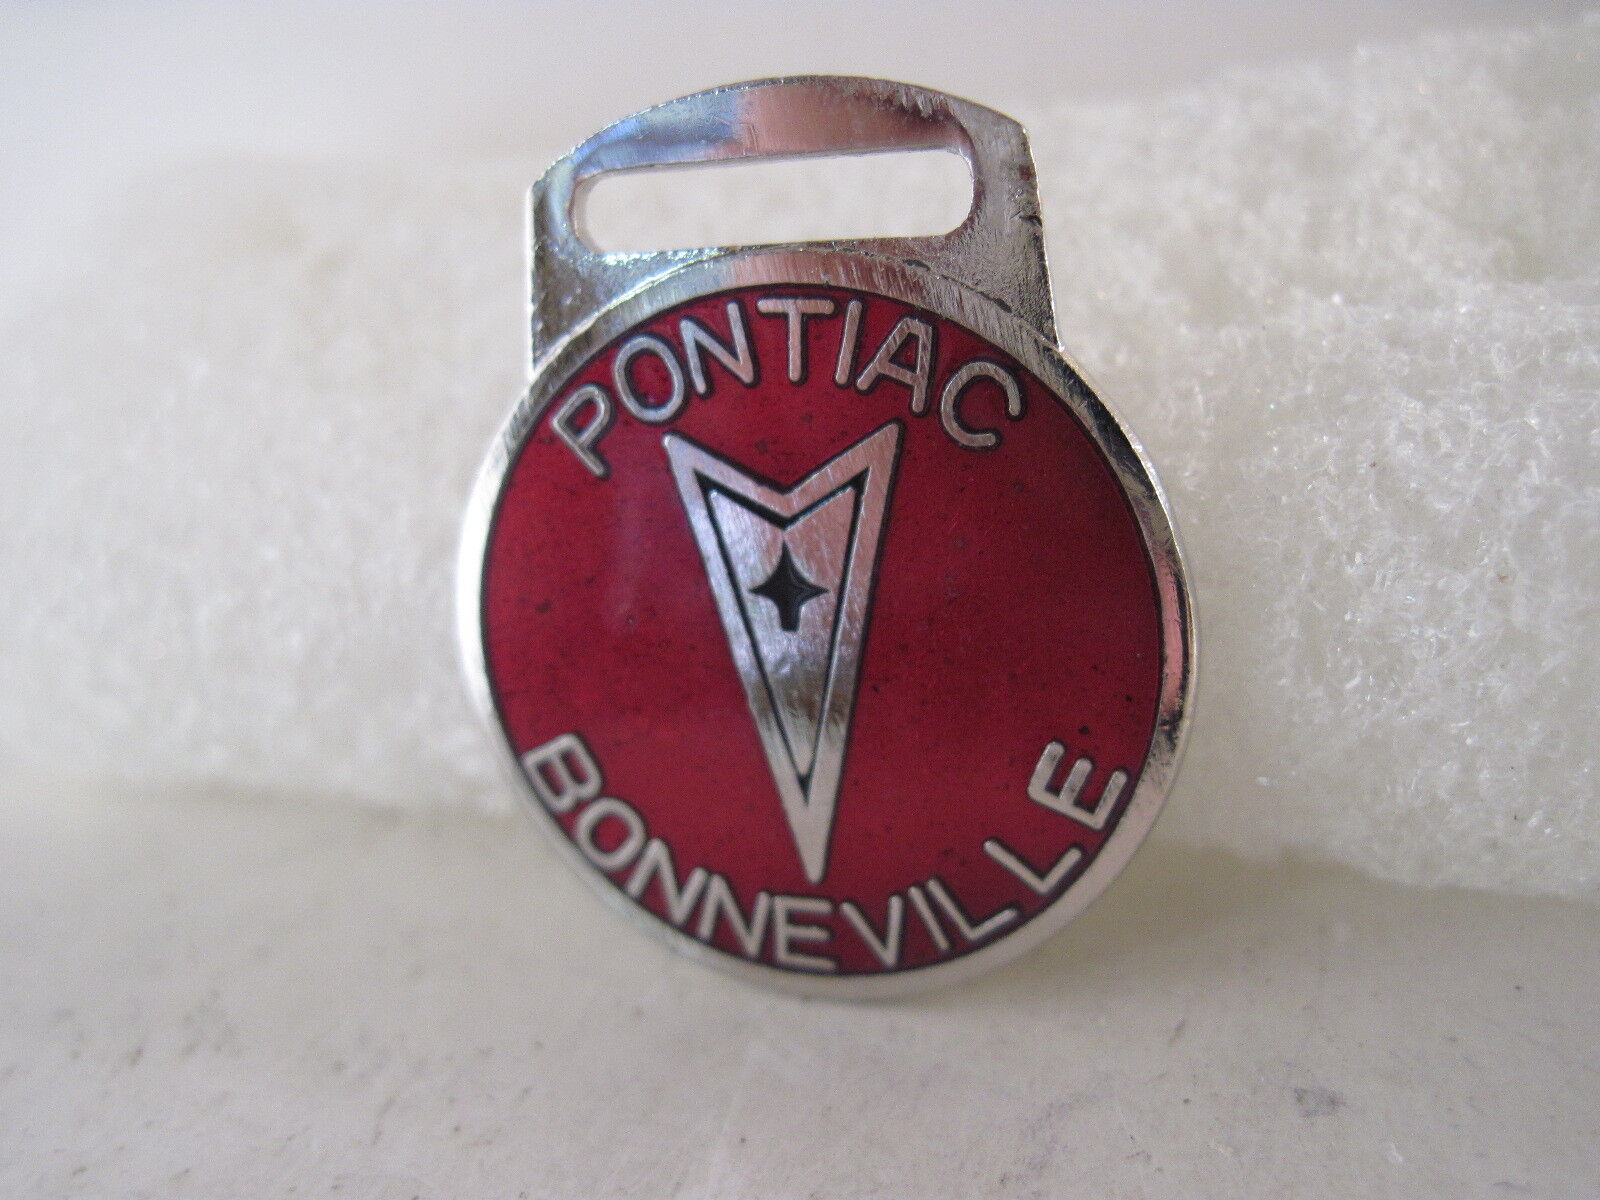 19?? Pontiac Bonneville Cloisonne  Key fob  (3685)  